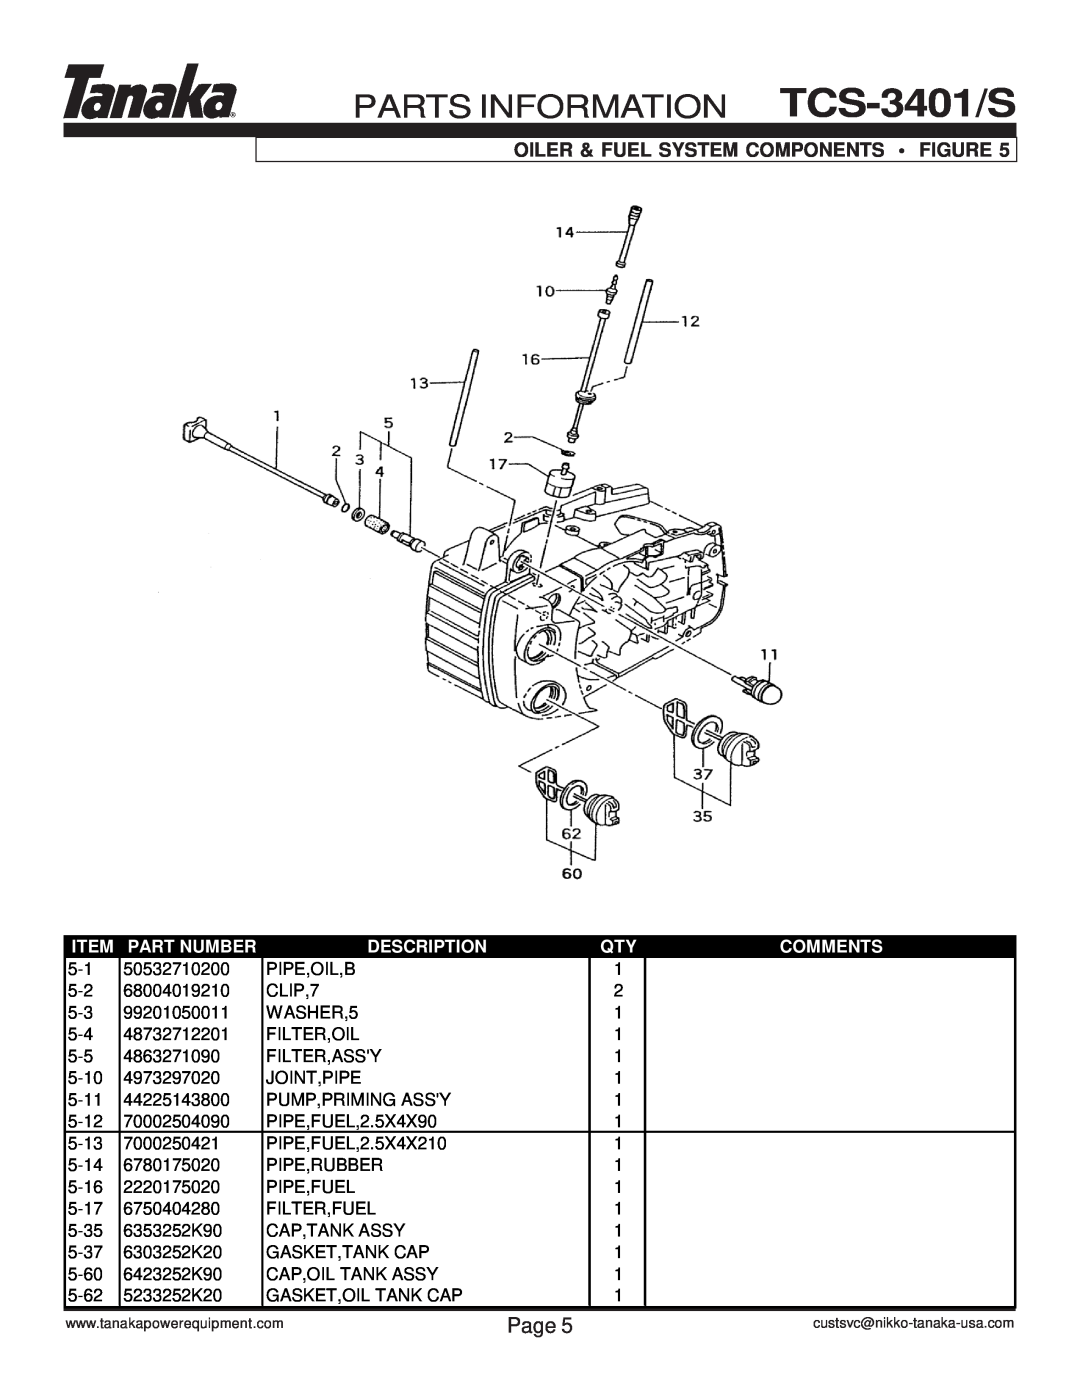 Tanaka Oiler & Fuel System Components Figure, PARTS INFORMATION TCS-3401/S, Page, Part Number, Description, Comments 